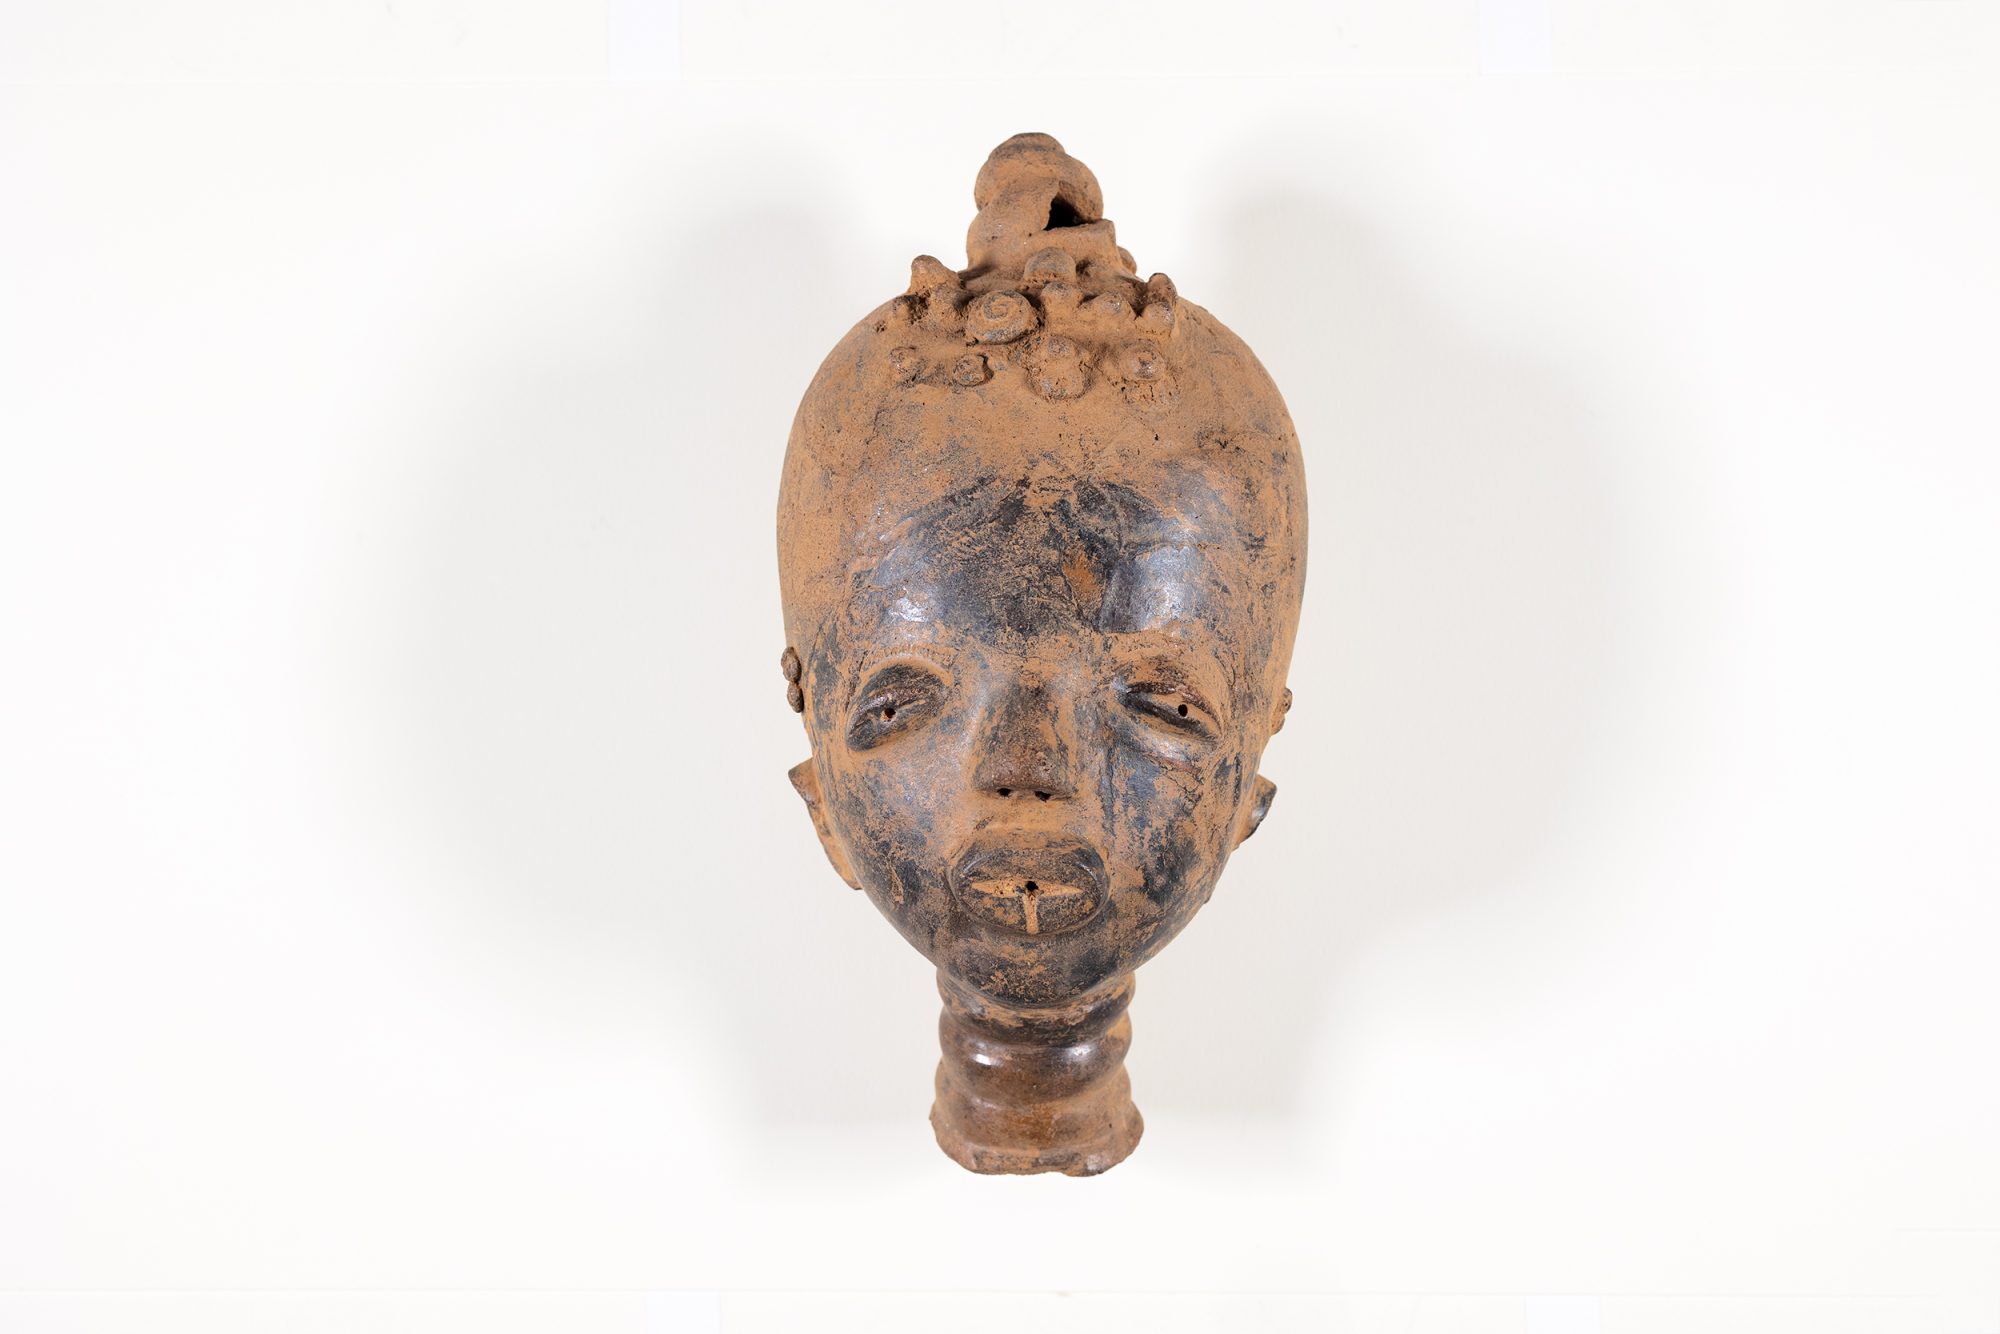 A sculpture of a head made of terracotta